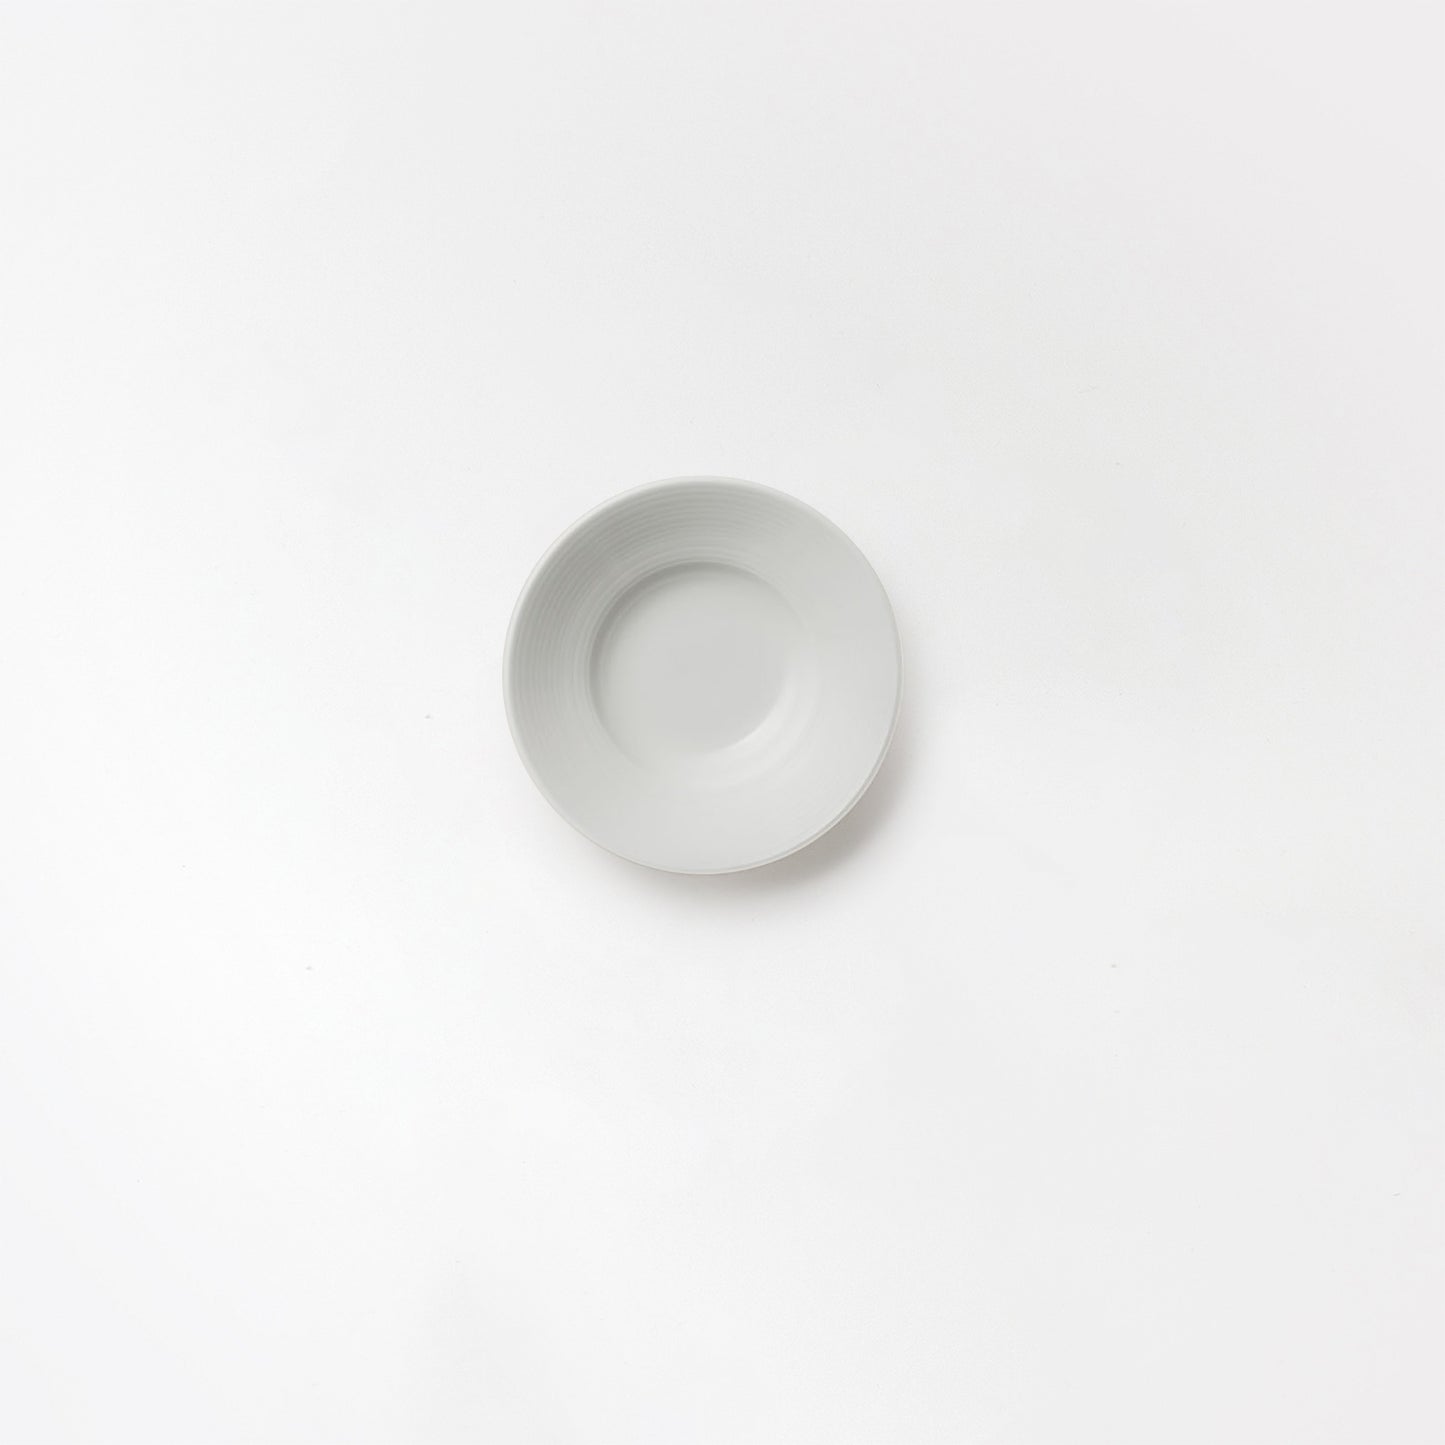 【復興支援商品】9.5cmリム小皿